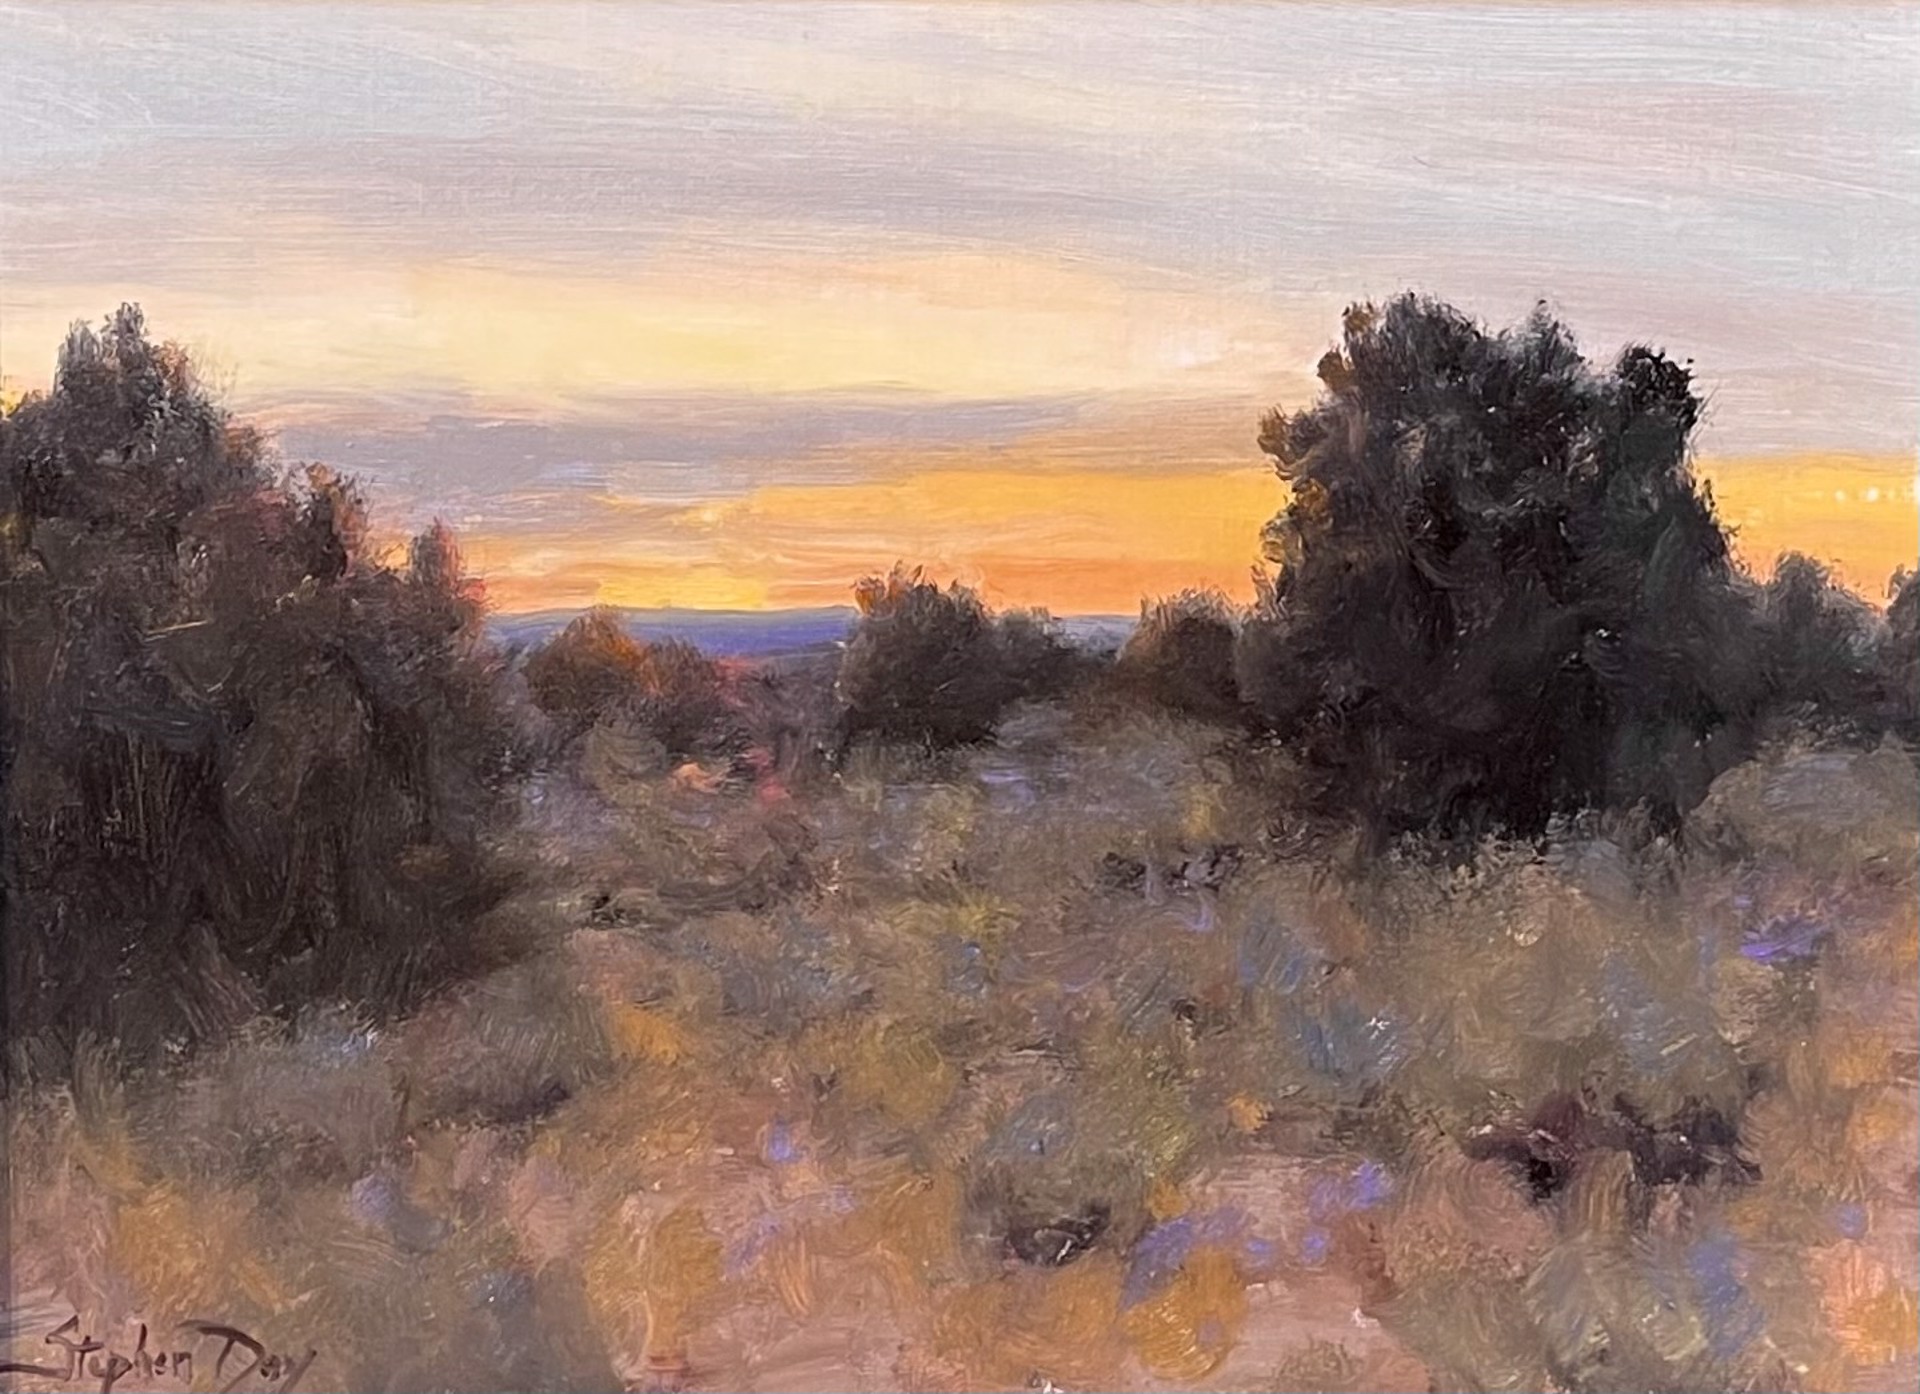 Sunset Vista by Stephen Day